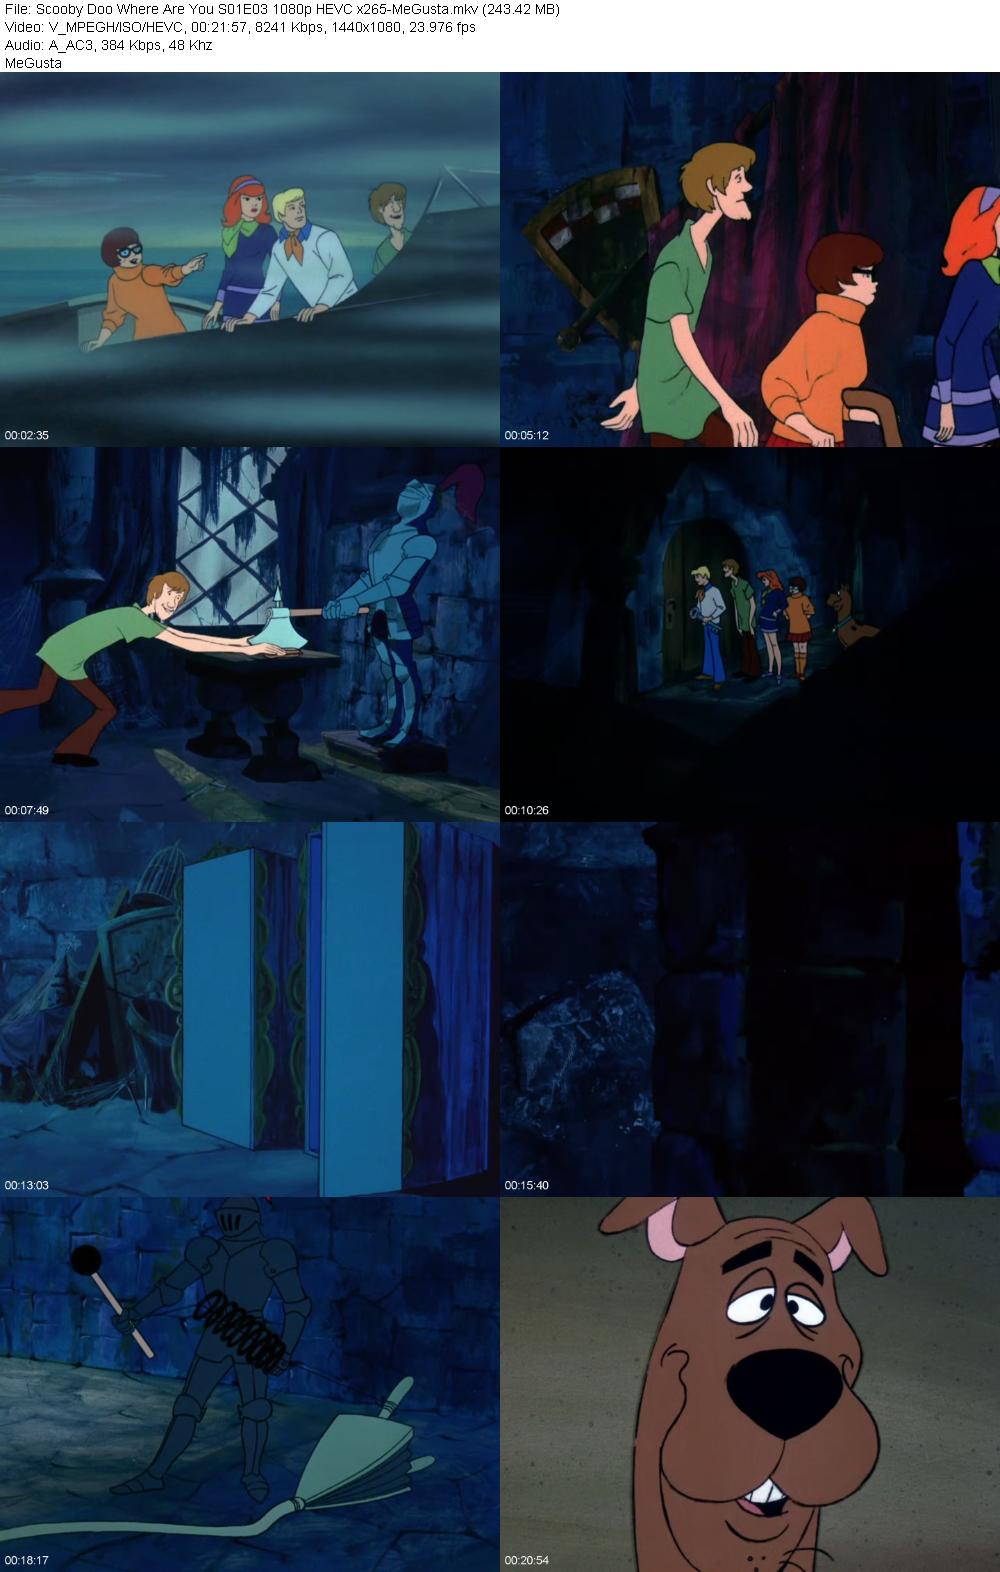 Scooby Doo Where Are You S01E03 1080p HEVC x265